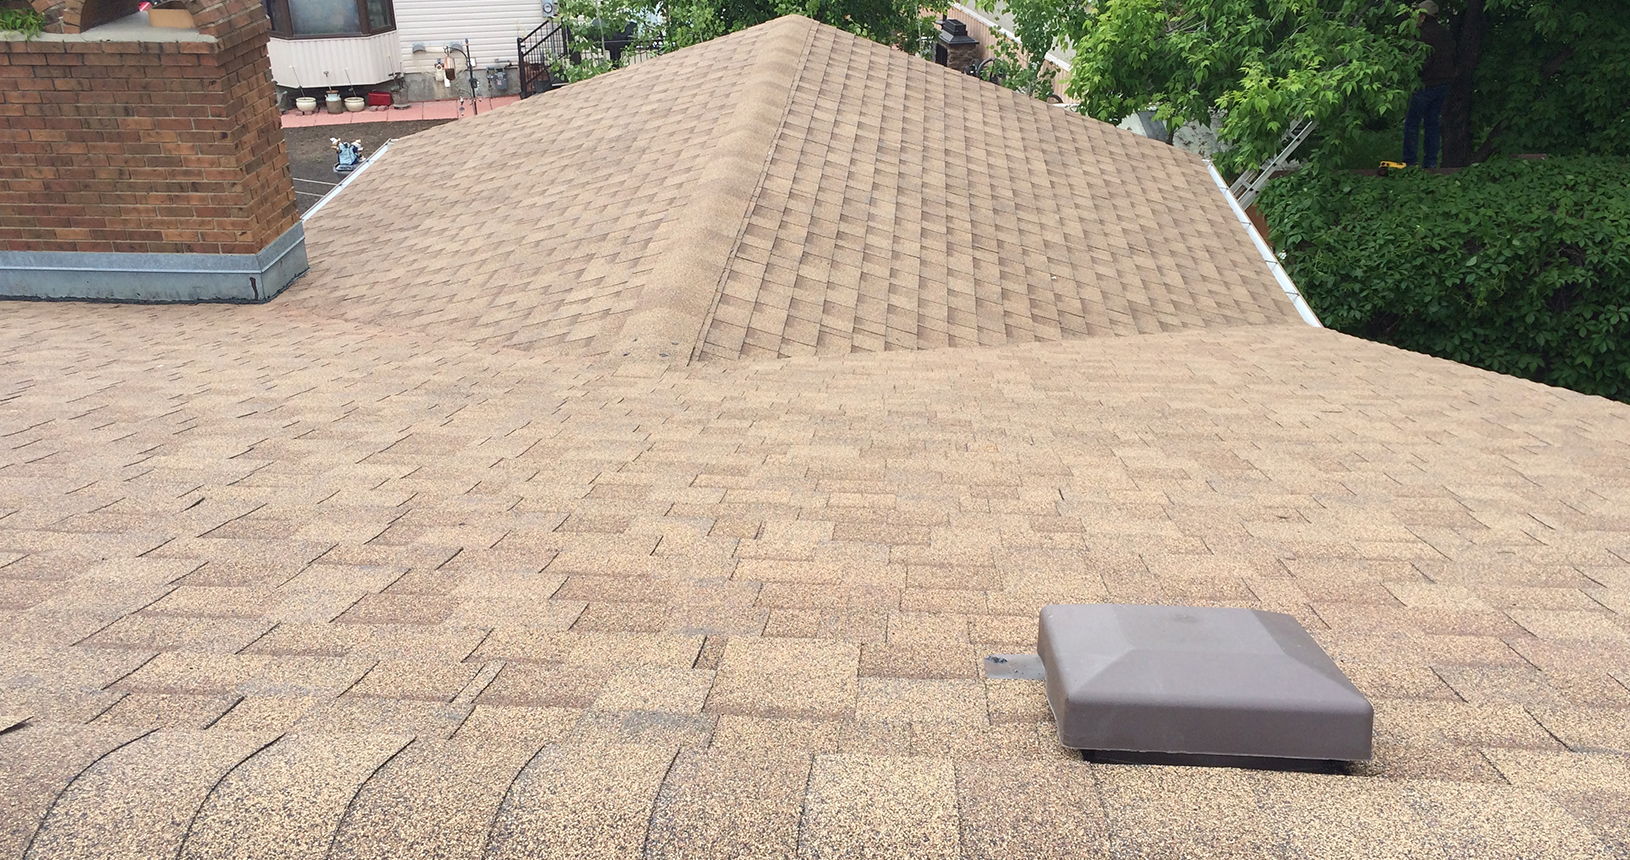 J&M Roofing Services: Asphalt Shingle Residential Roof